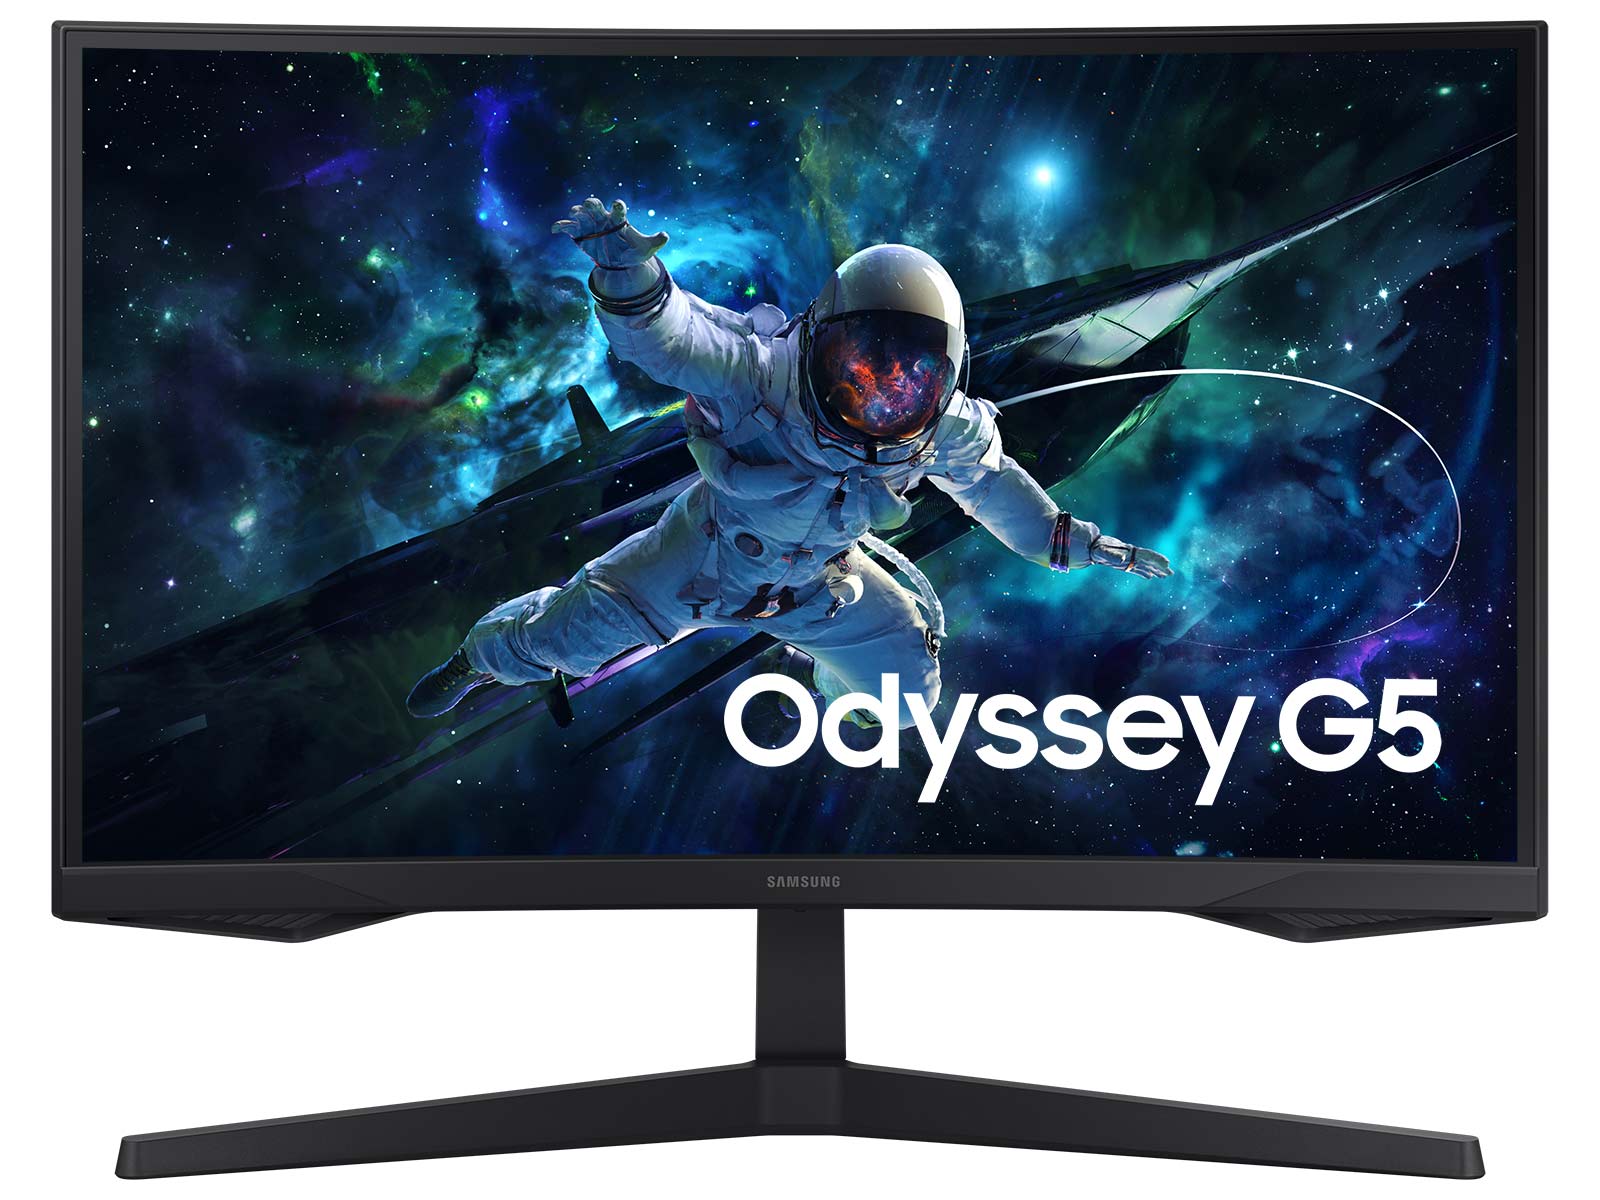 Samsung - Ecran Gaming incurvé Odyssey G5 144Hz 32